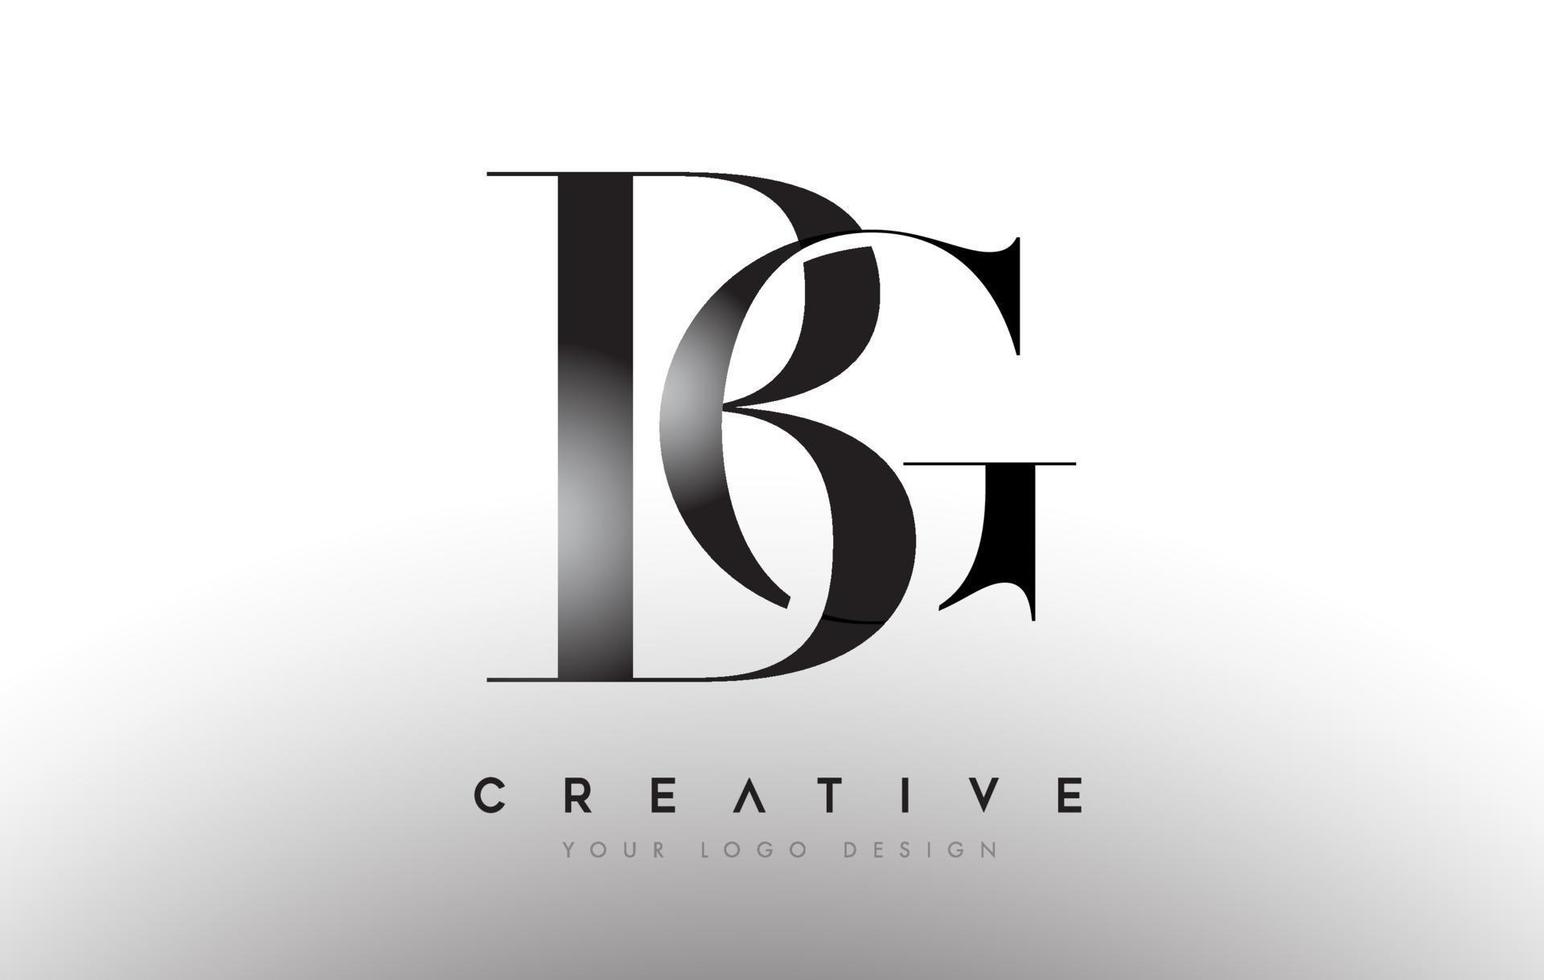 BG bg letter design logo logotype icon concept with serif font and ...